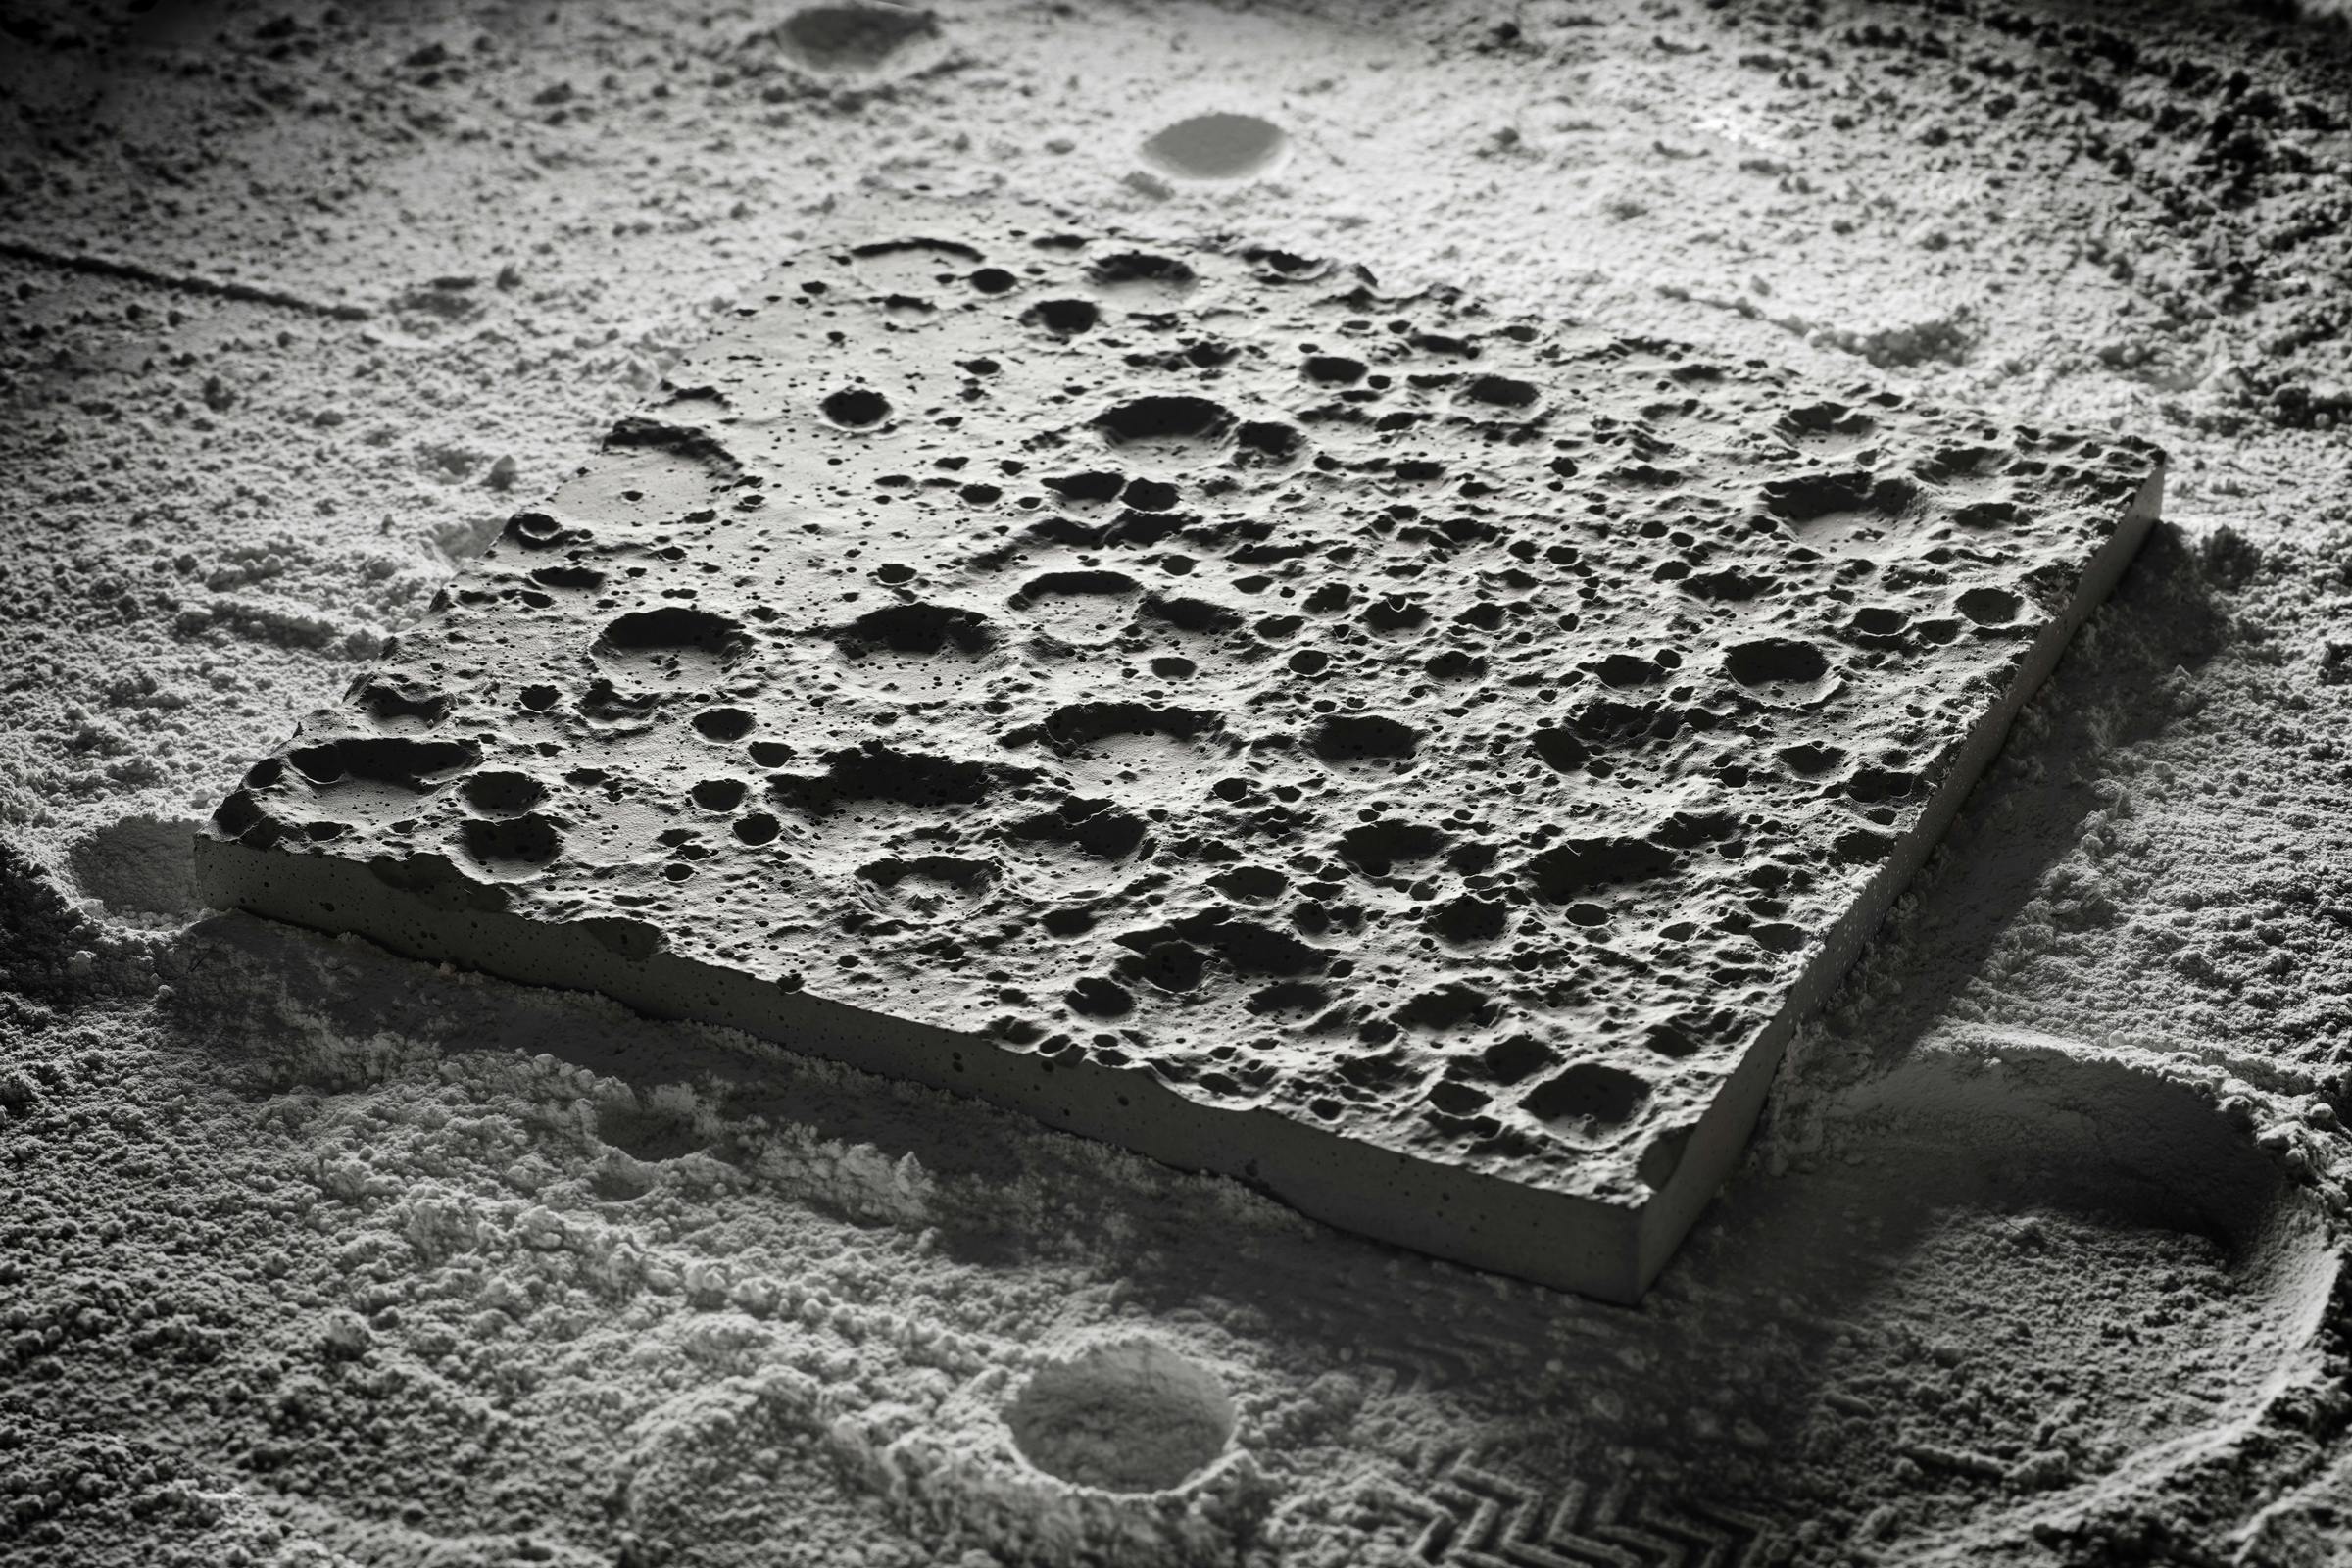 Nasaデータから製造した月面 Lunar Surface が登場 Campfire キャンプファイヤー